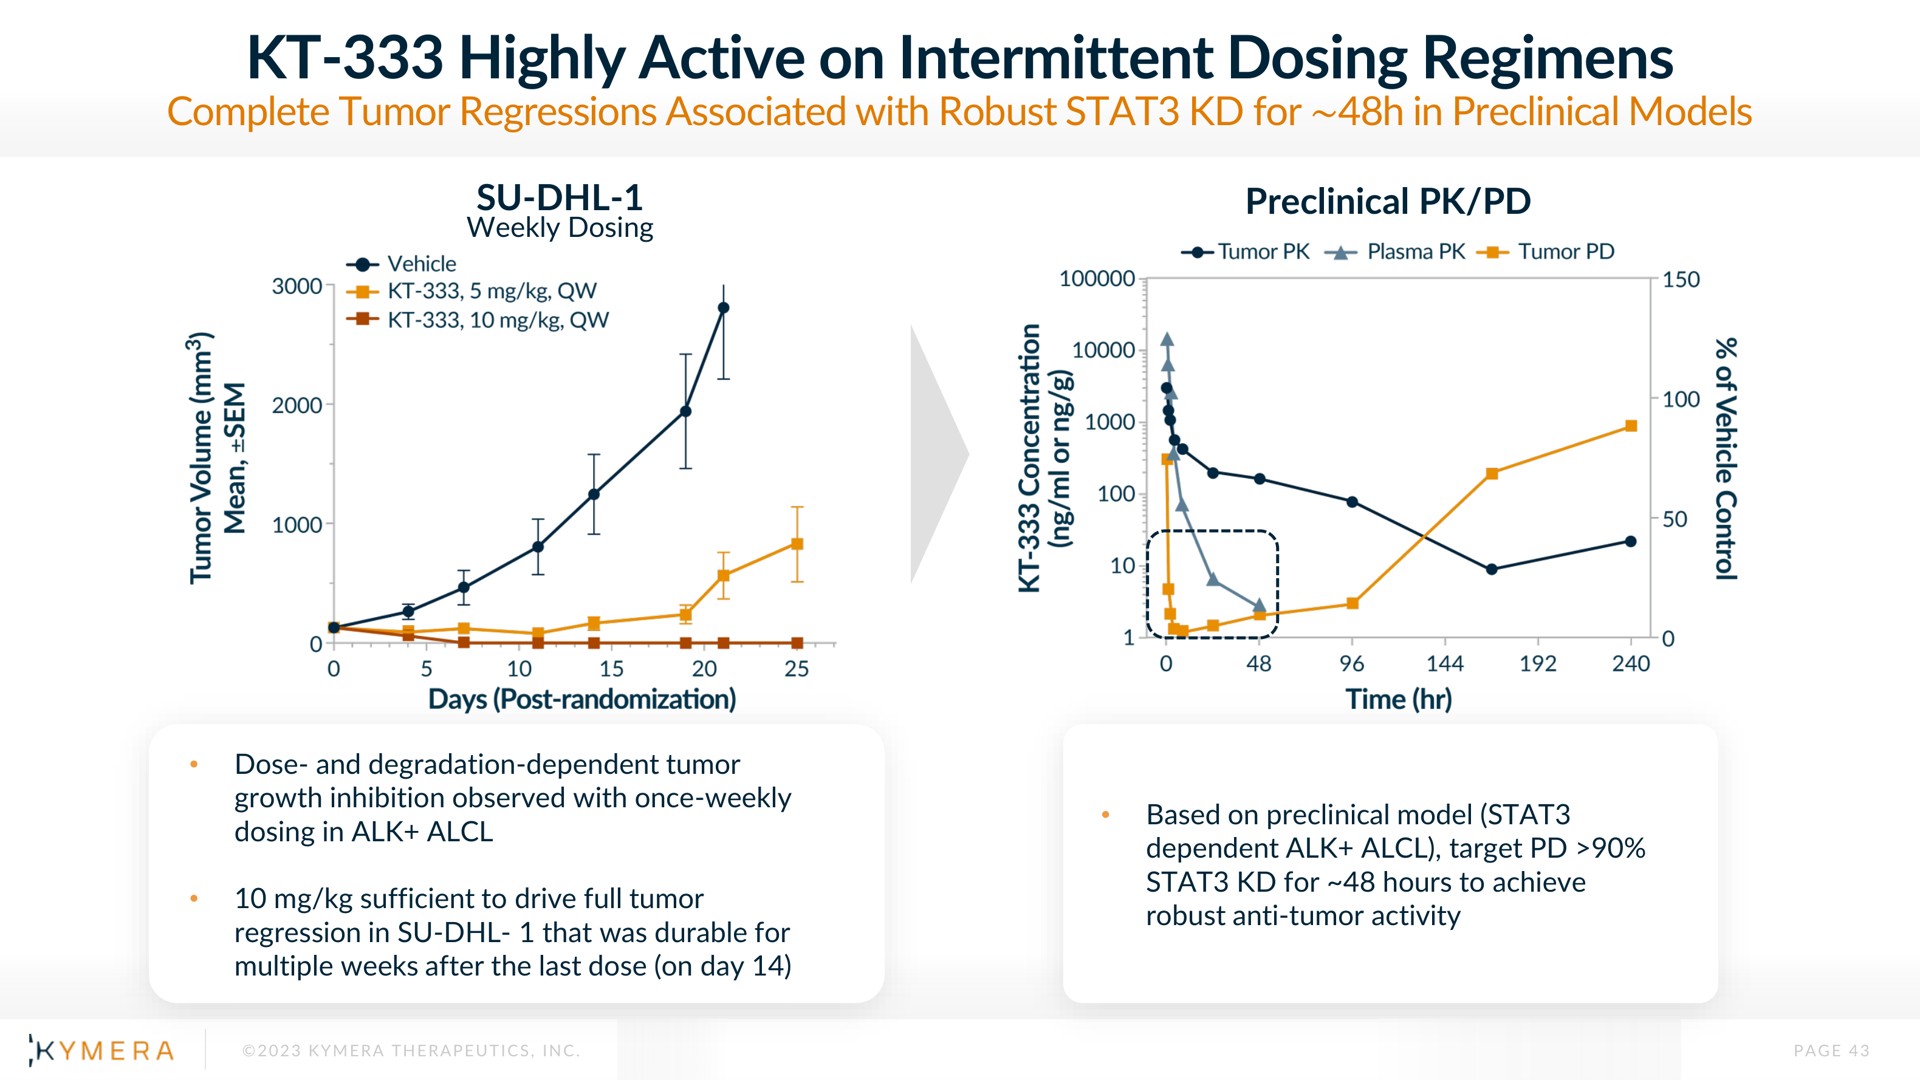 highly active on intermittent dosing regimens | Kymera